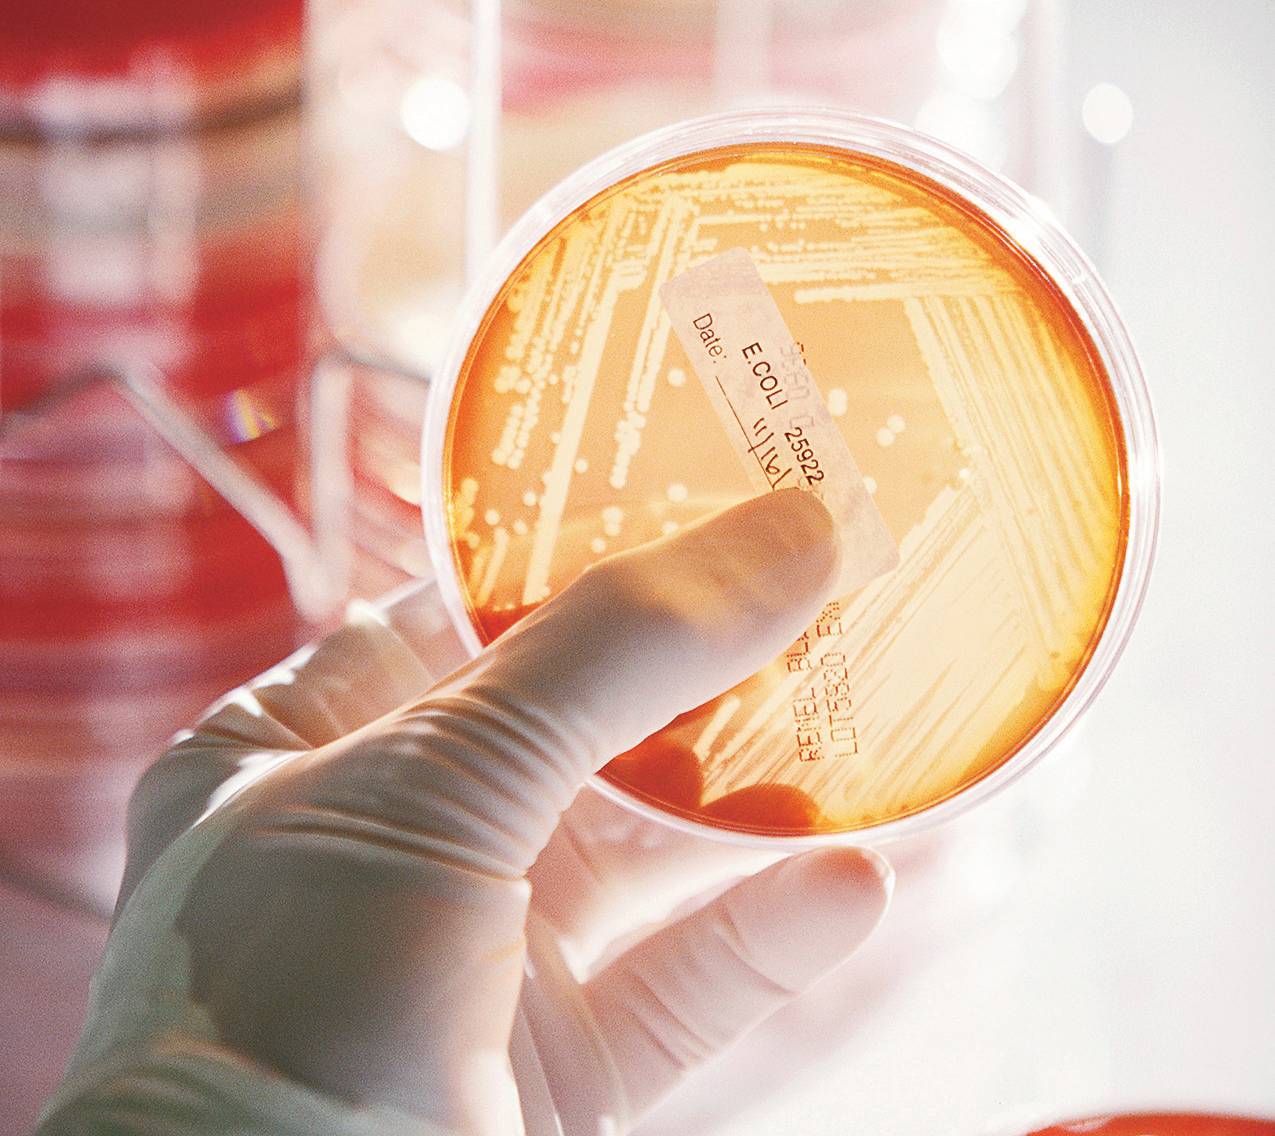 A culture of the potentially deadly Escherichia coli